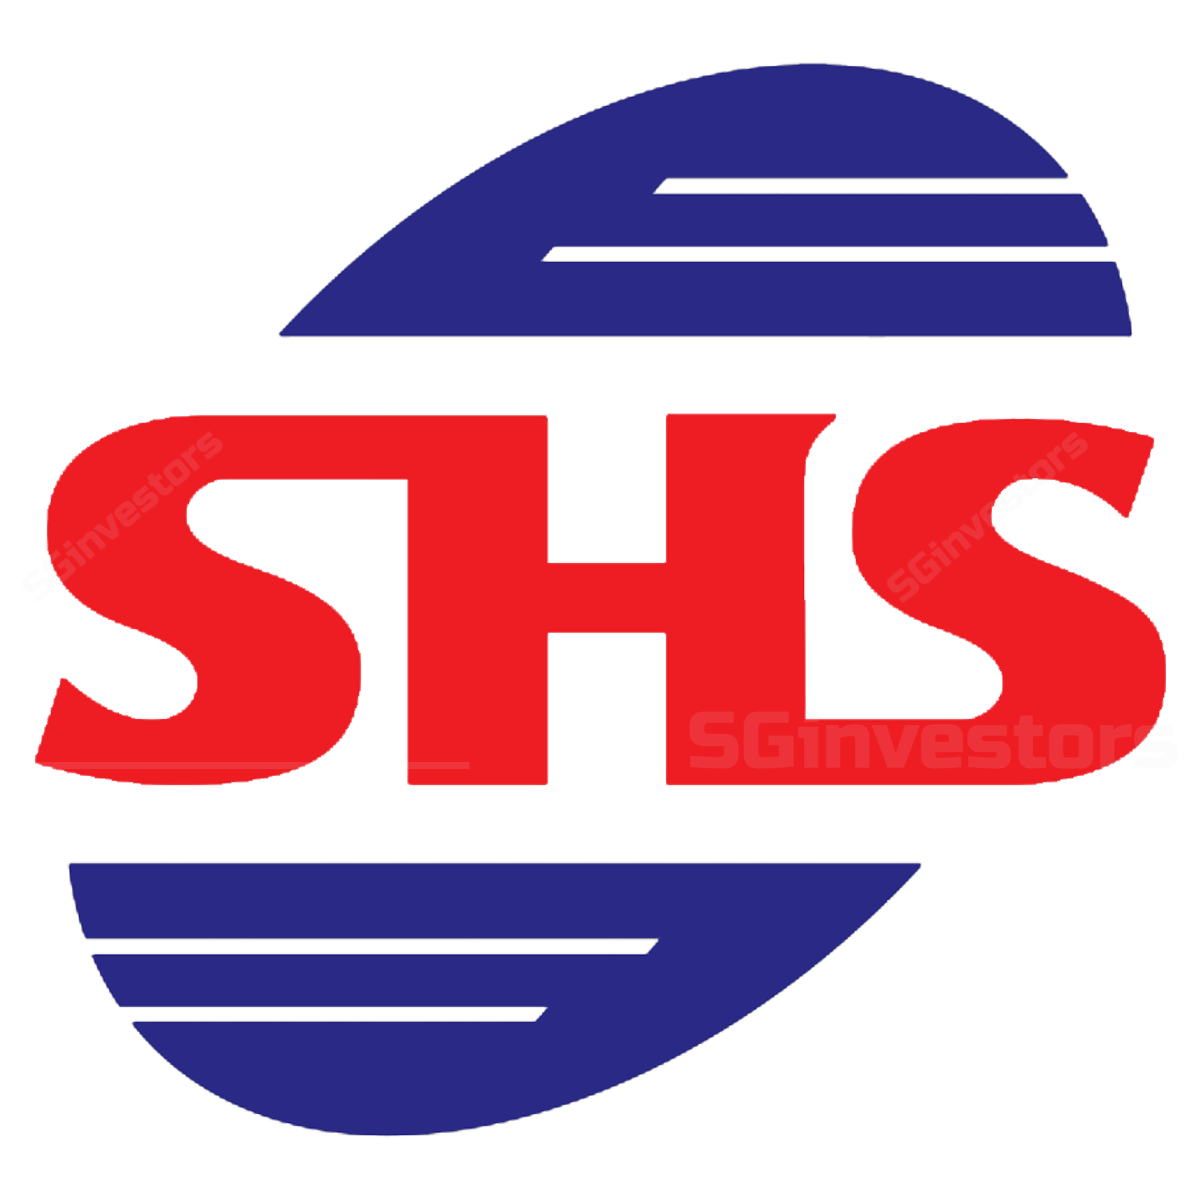 SHS HOLDINGS LTD. (SGX:566) | SGinvestors.io